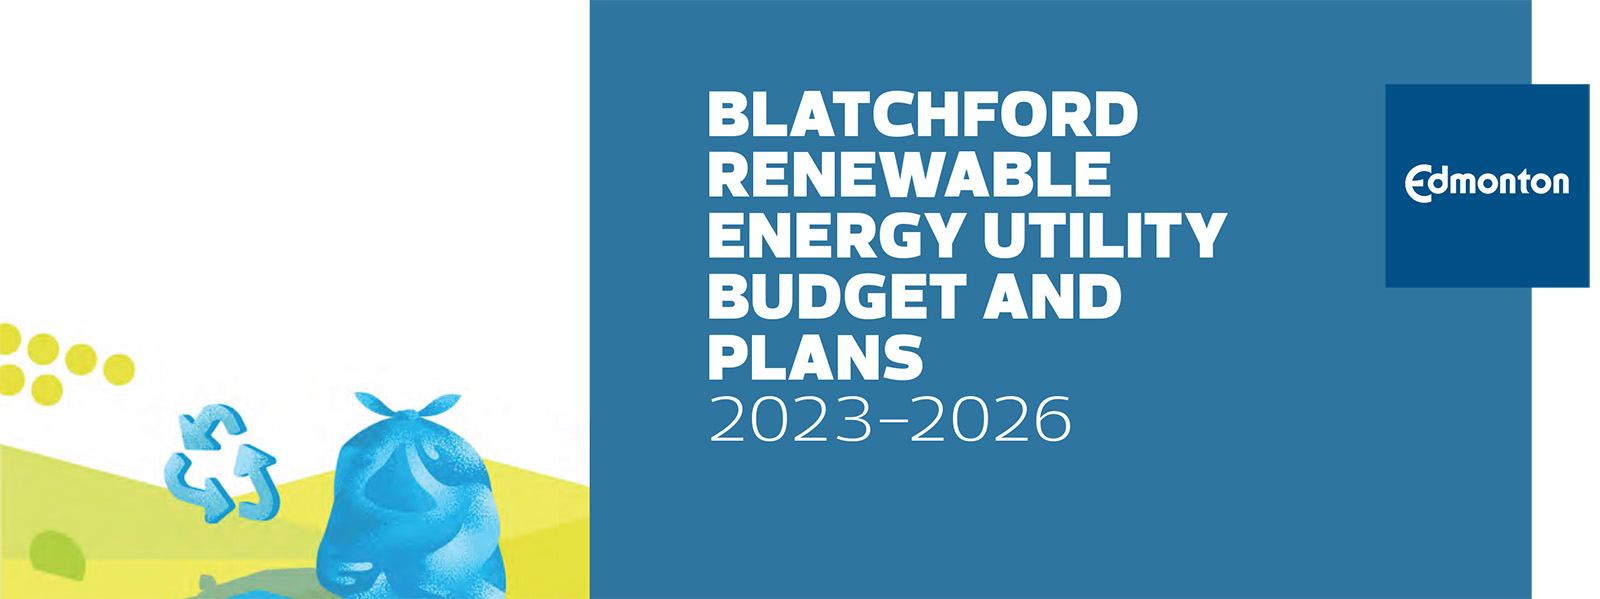 2023-2026 Blatchford Utility Budget cover